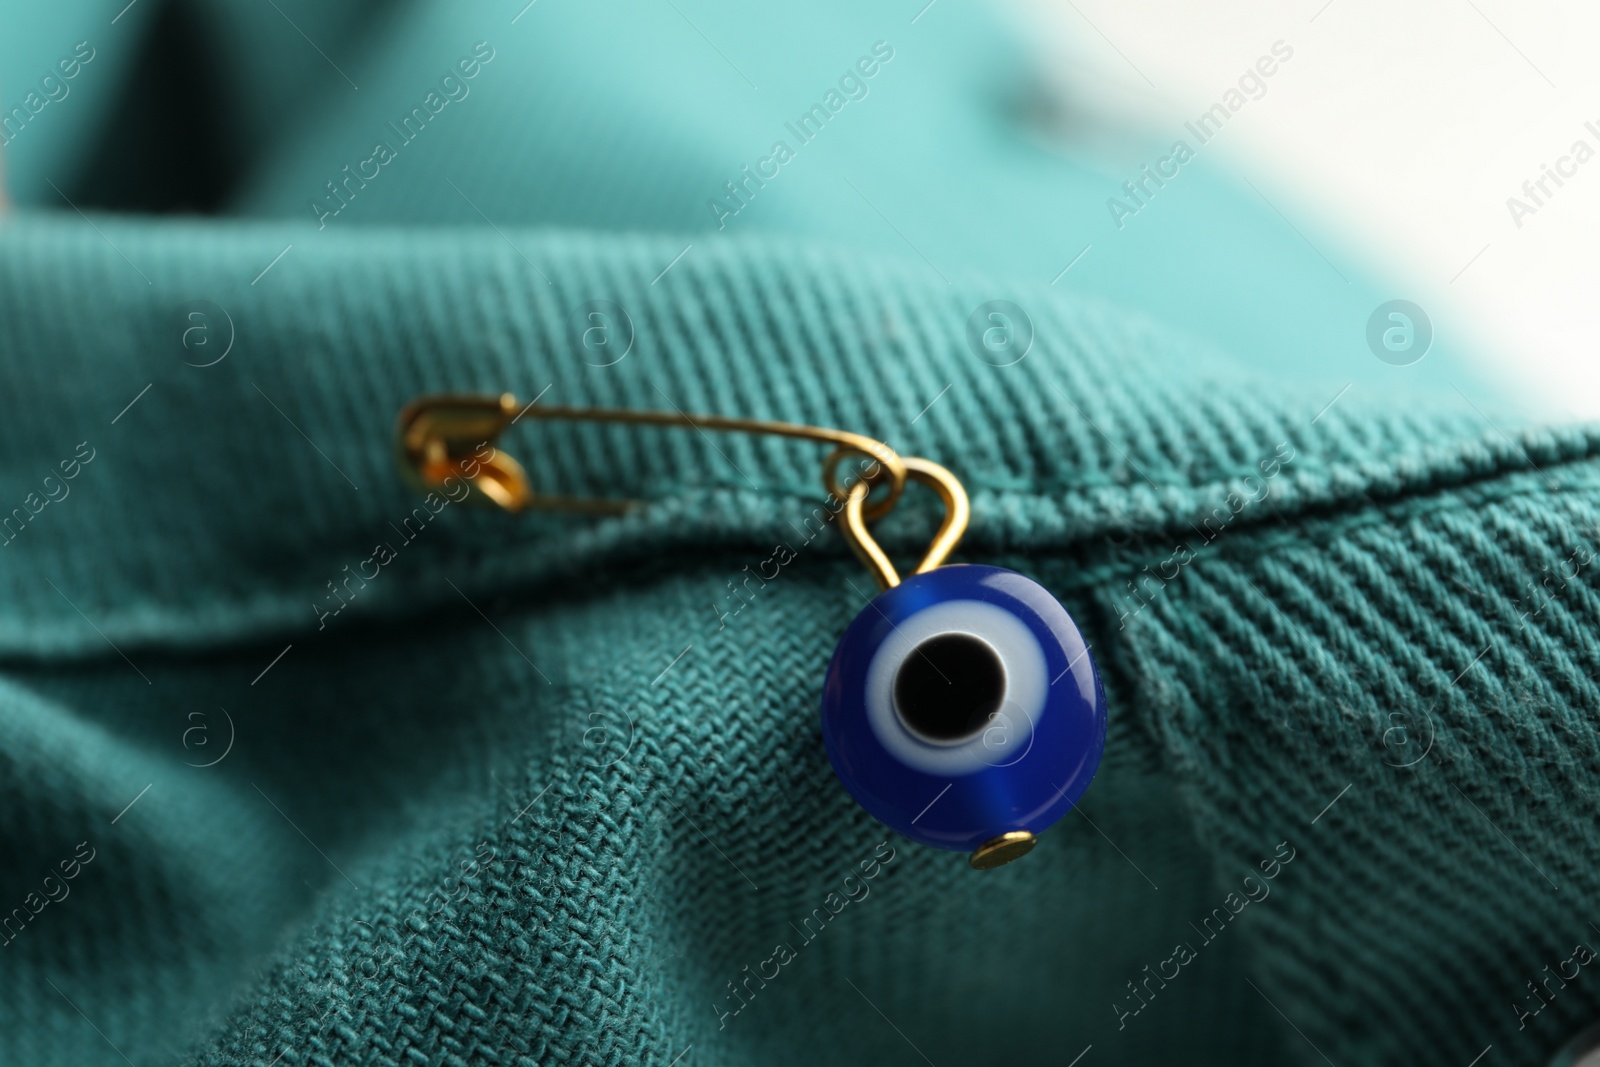 Photo of Evil eye safety pin on denim clothing, closeup